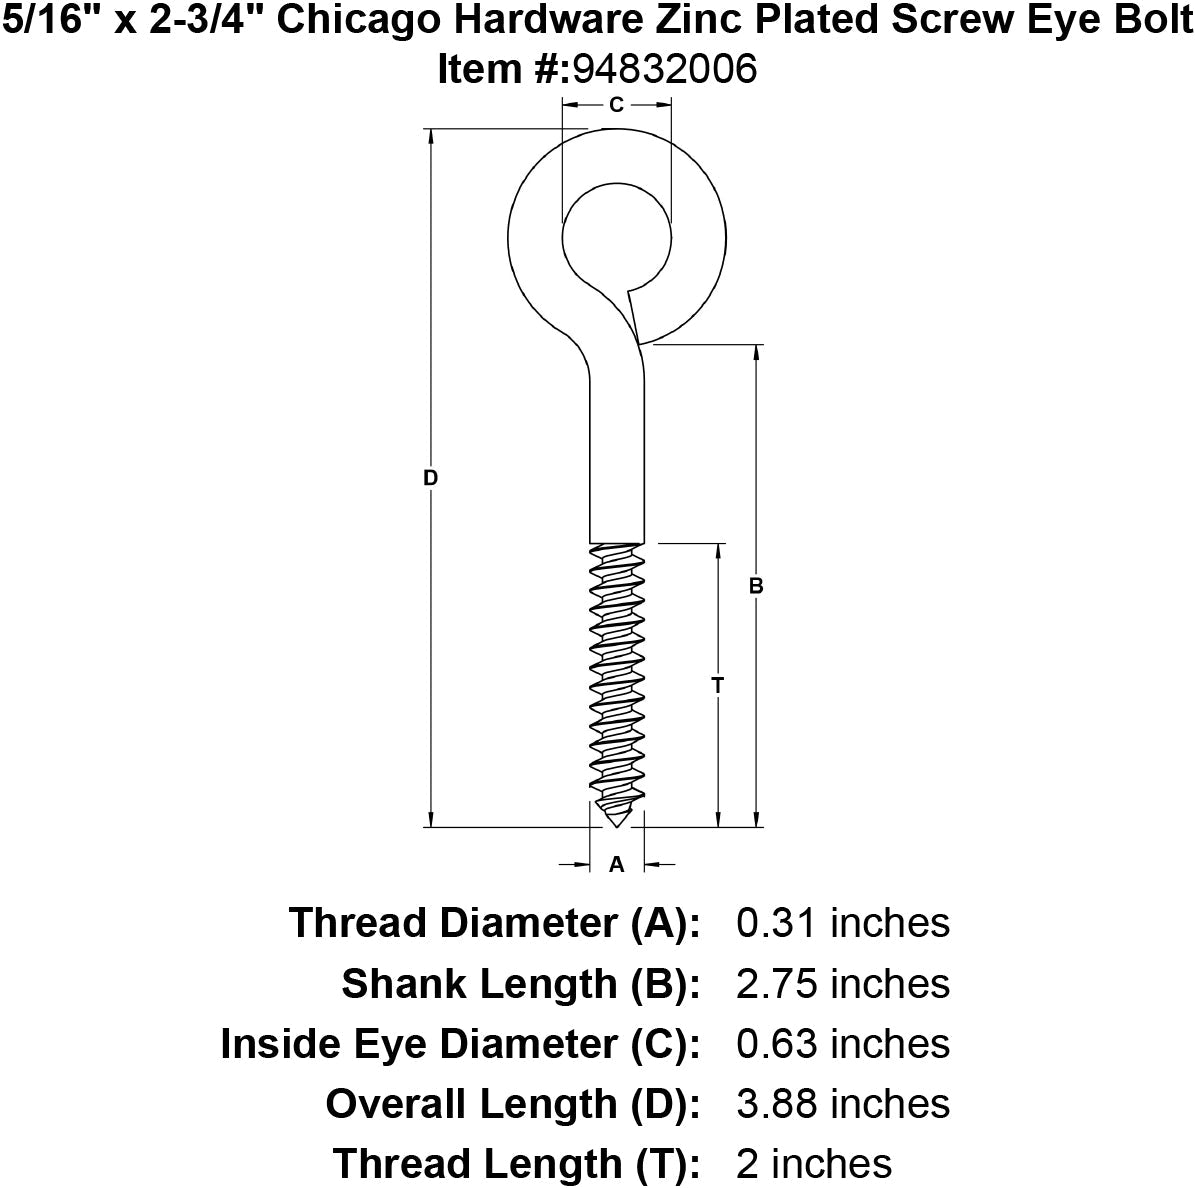 Chicago Hardware Zinc Plated Screw Eye Bolts